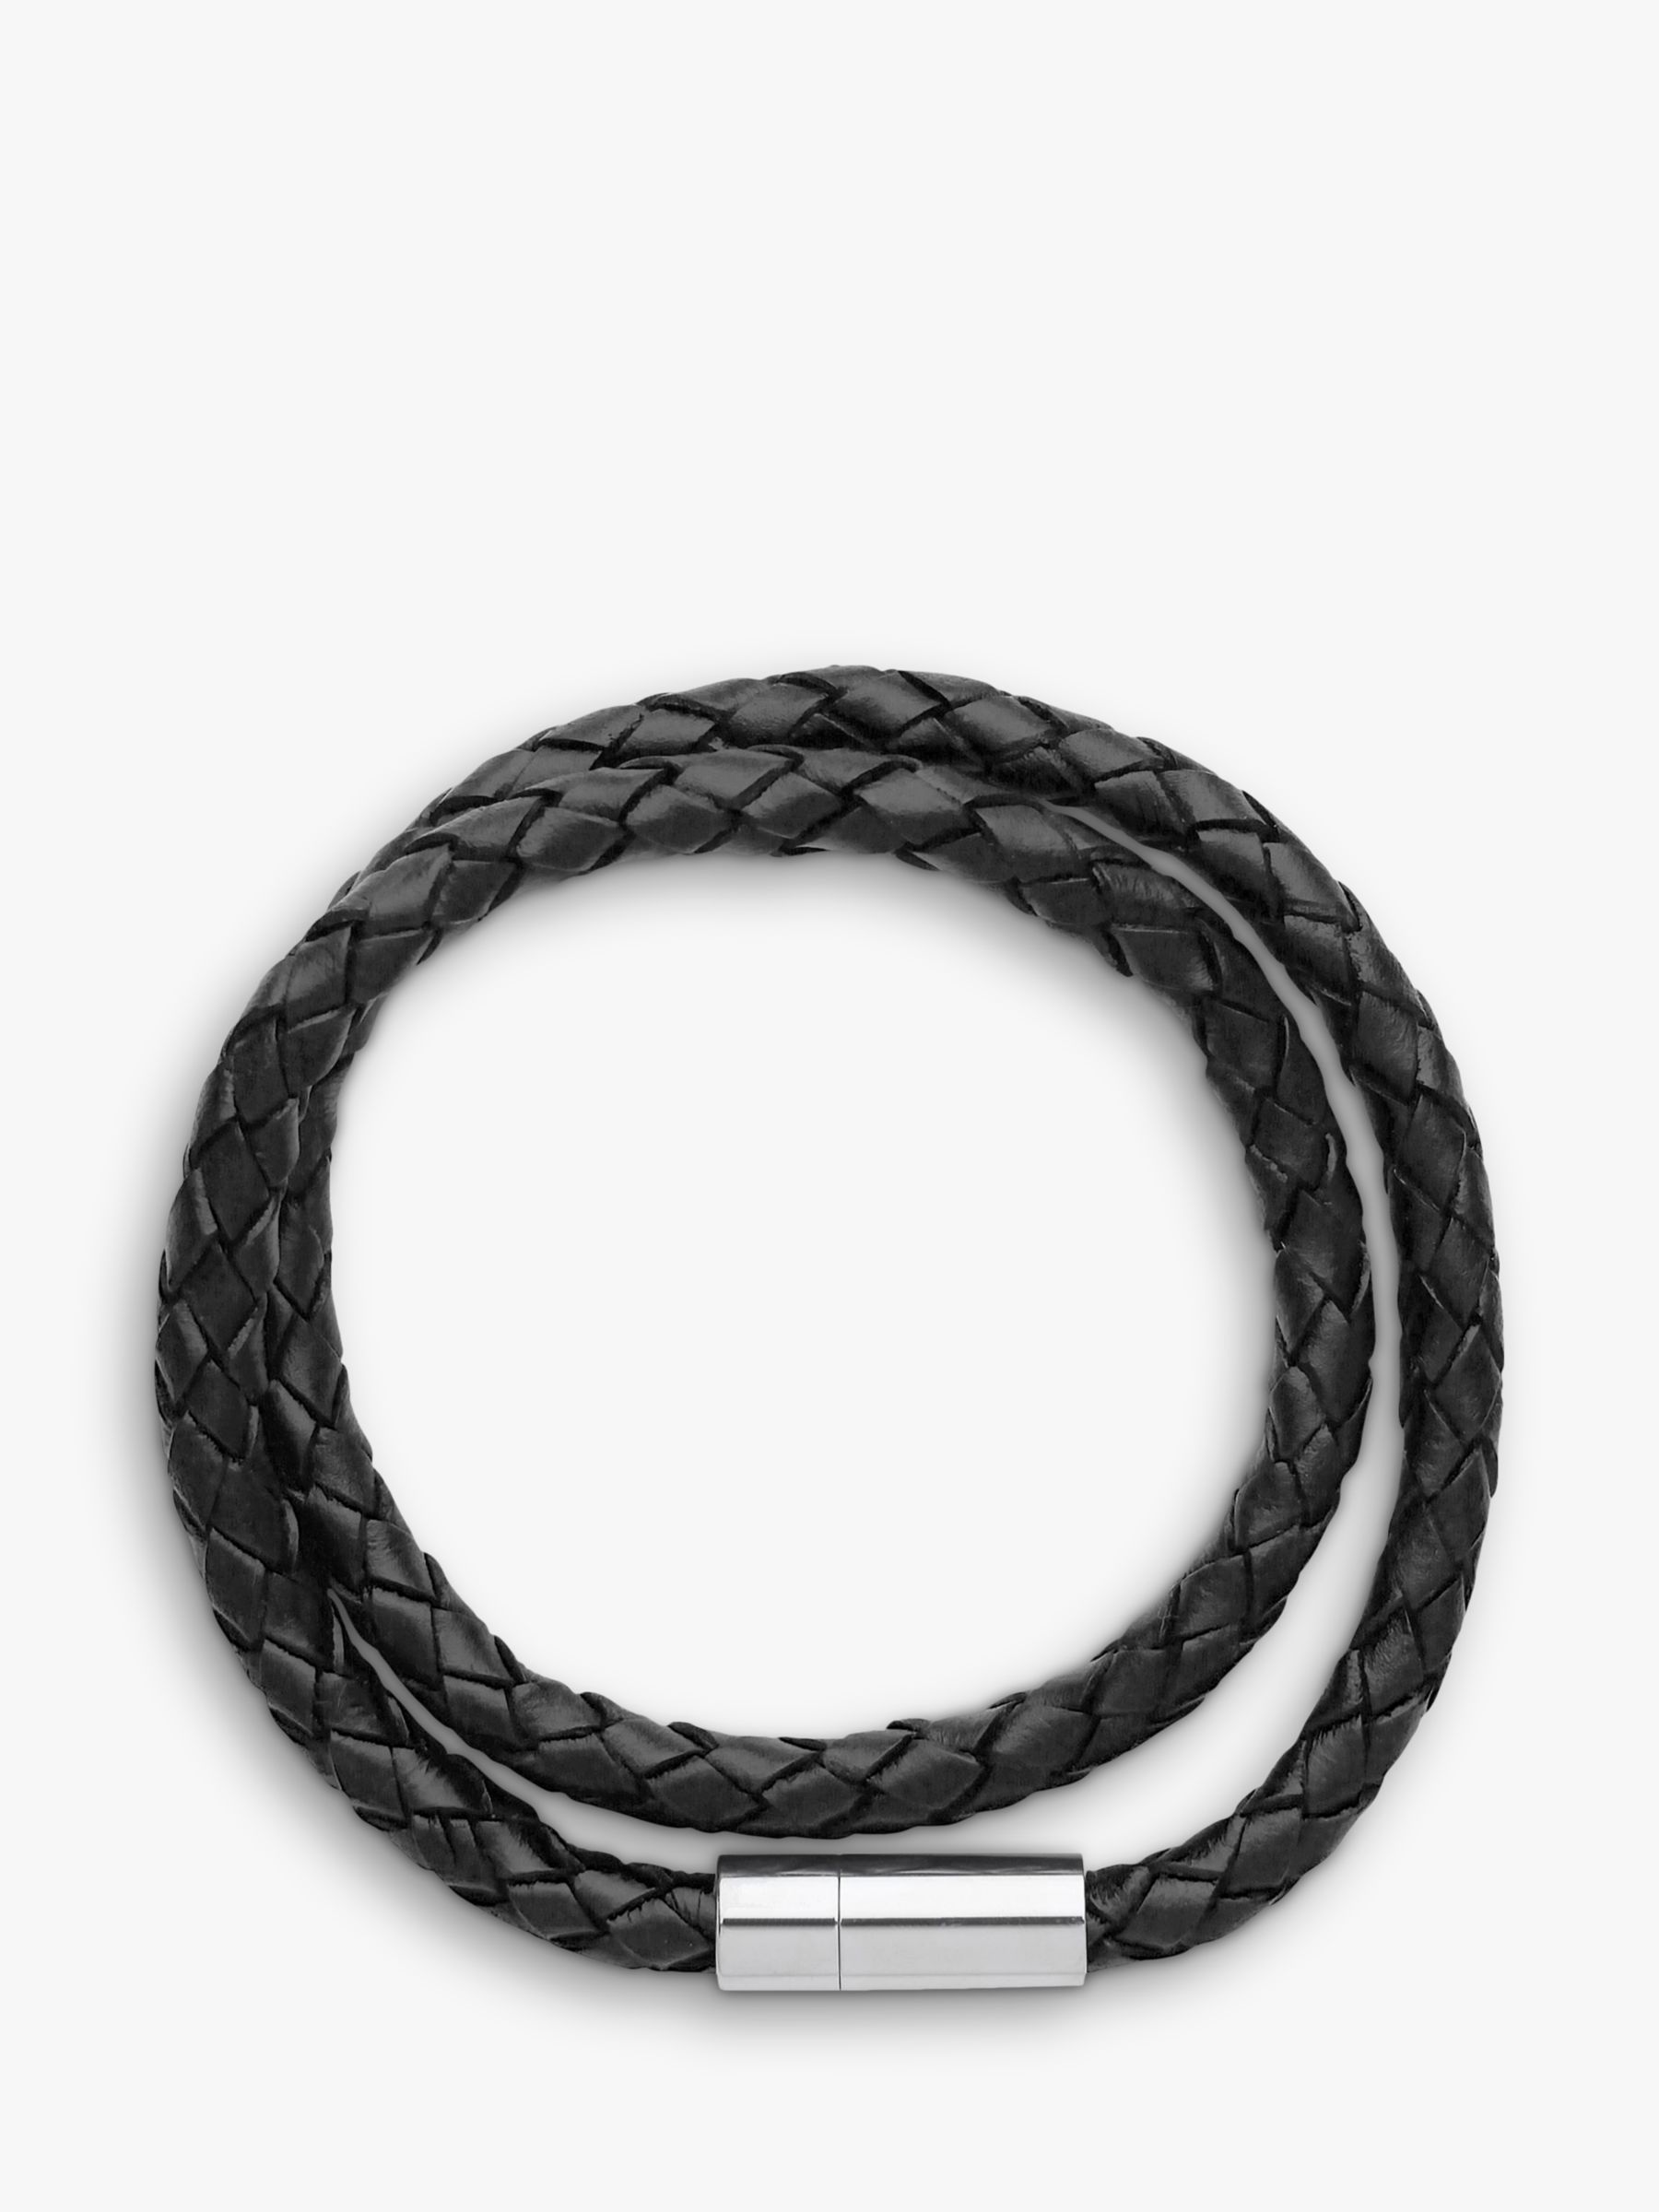 Buy BARTLETT LONDON Men's Woven Leather Double Wrap Bracelet Online at johnlewis.com